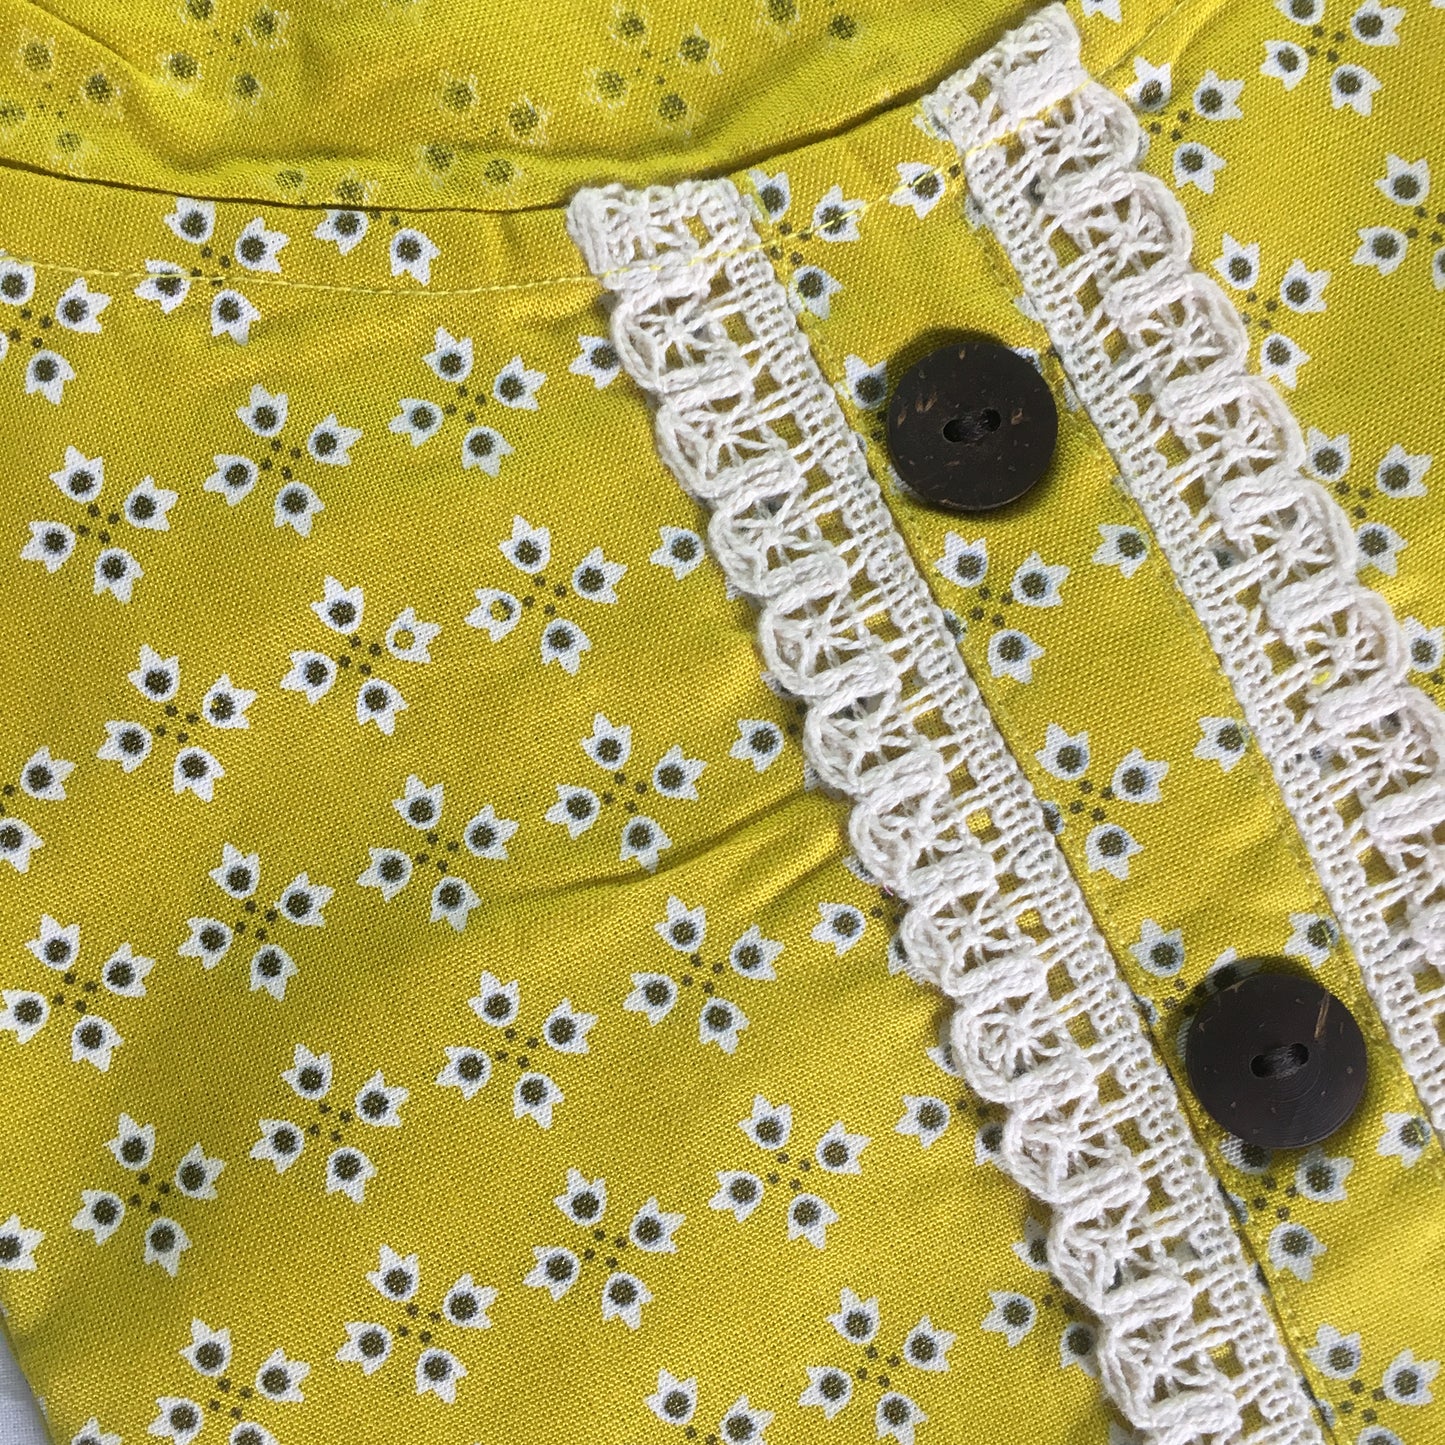 Yellow Lace work Cotton Kurti- Knee Length - 3871